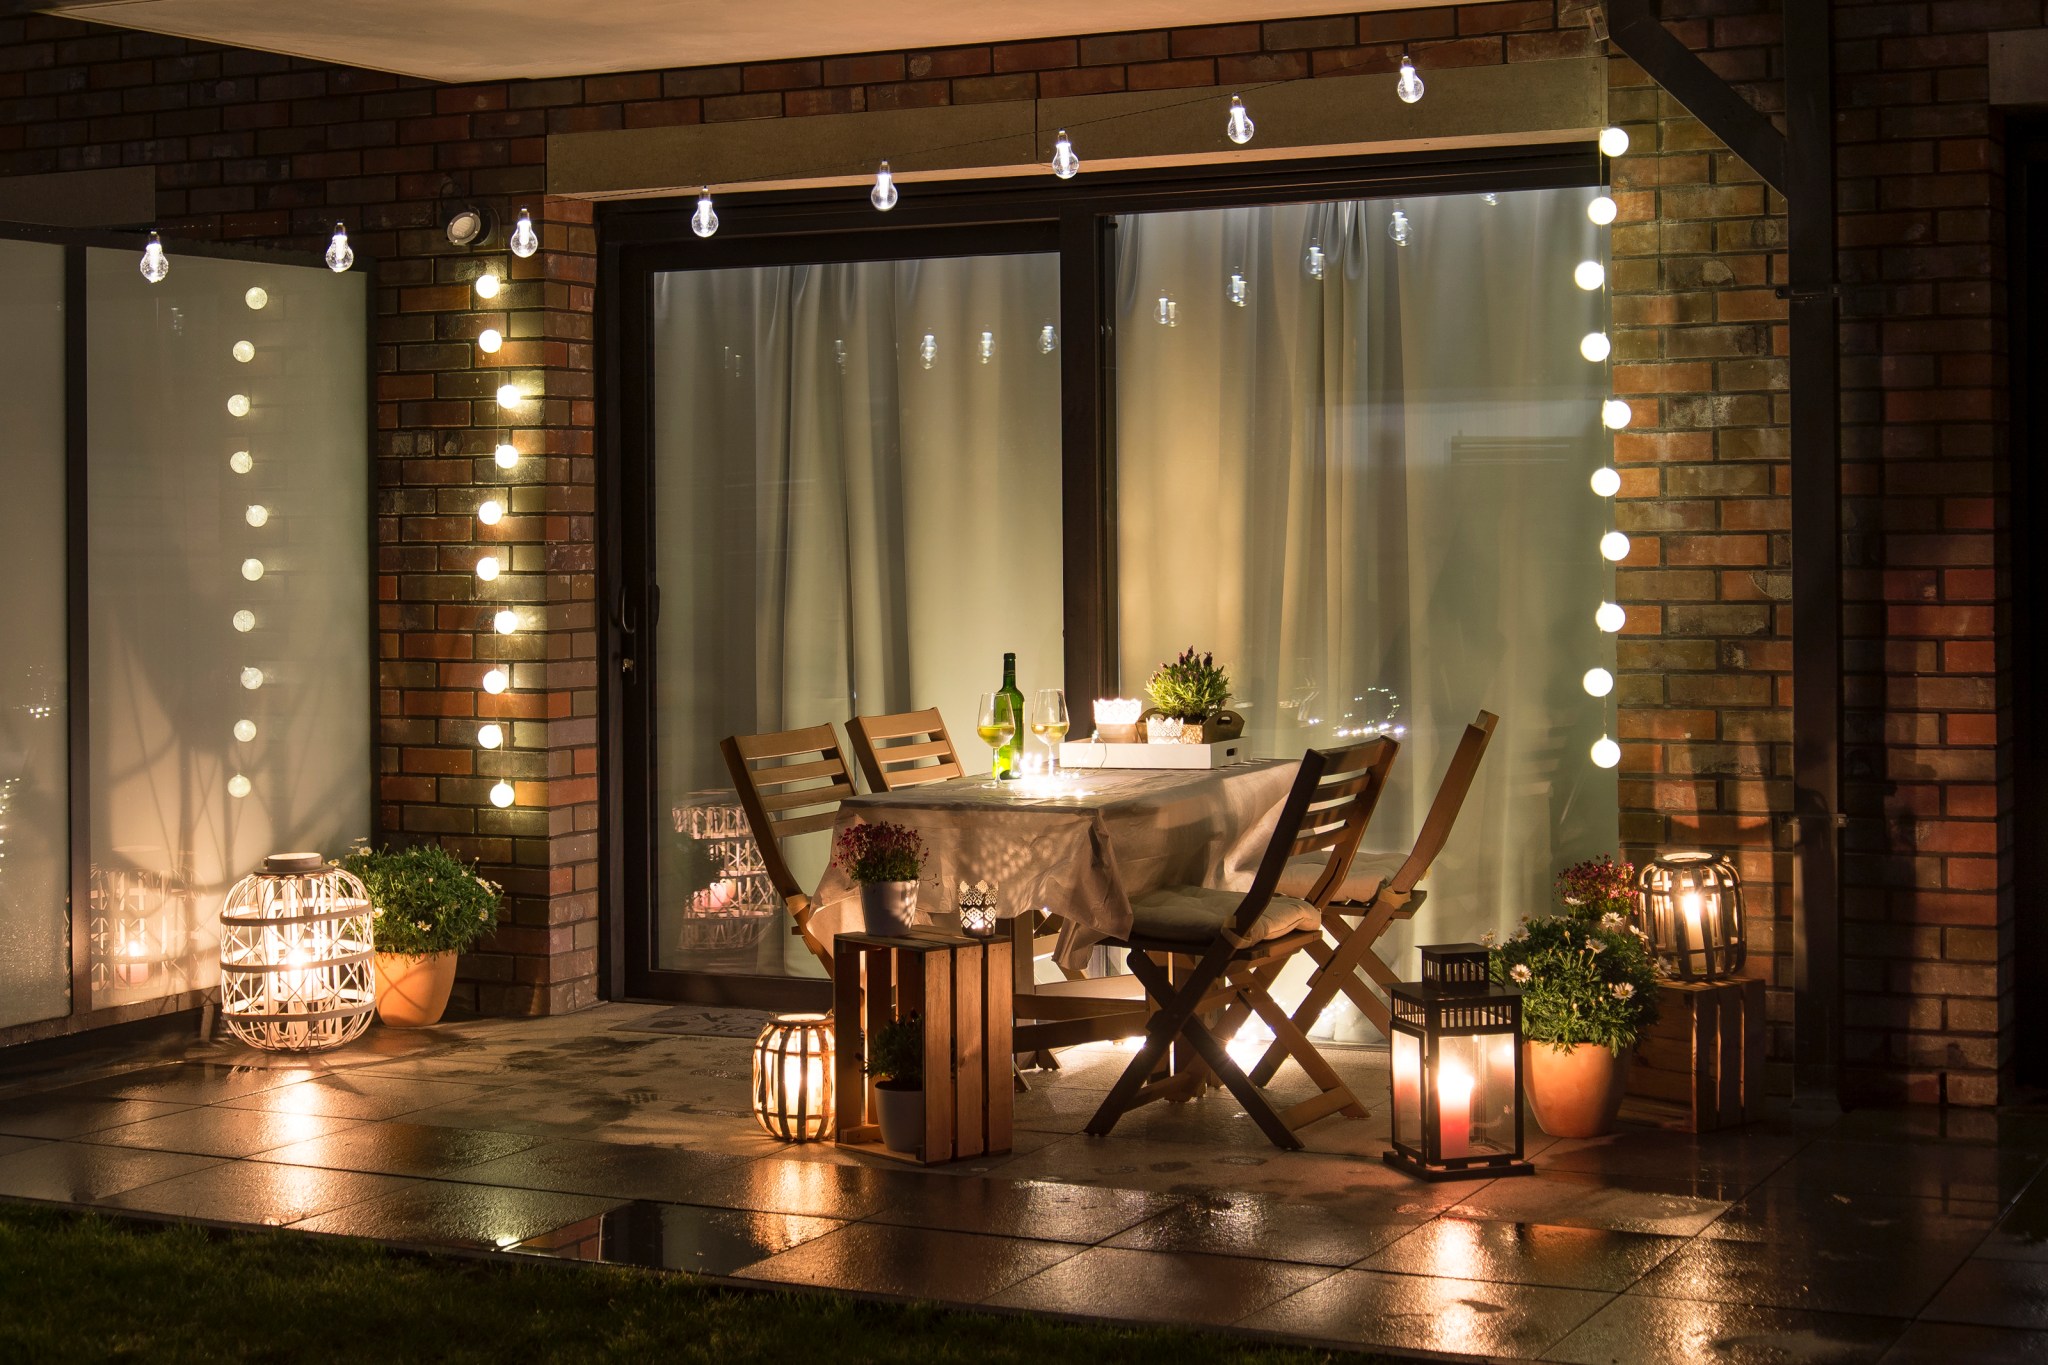 5 outdoor patio lighting ideas